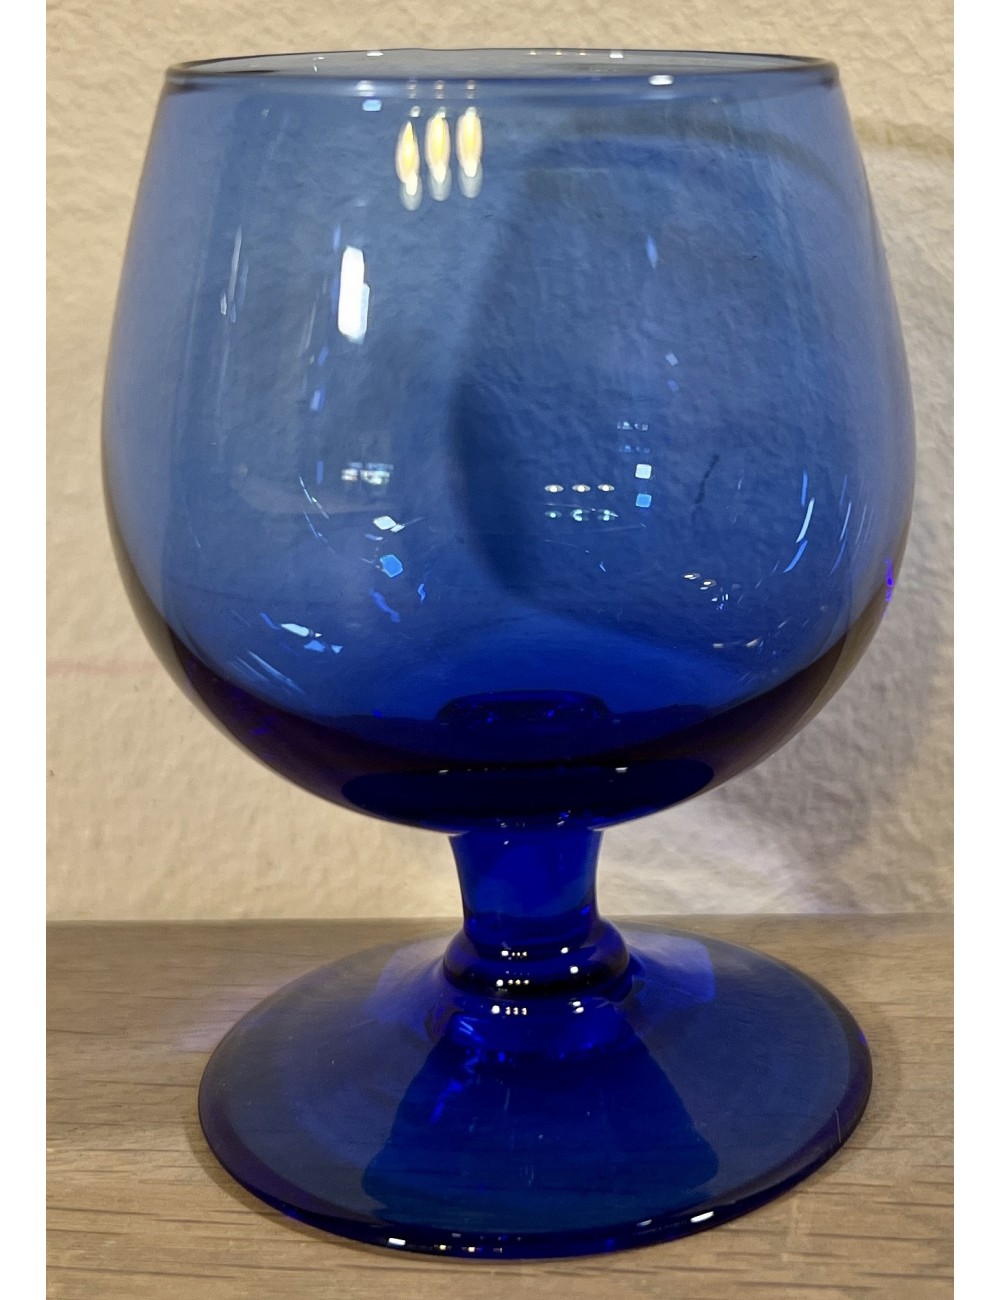 Likeurglas / Borrelglas - vintage - ongemerkt - in blauwe kleur met gelijkgekleurde voet